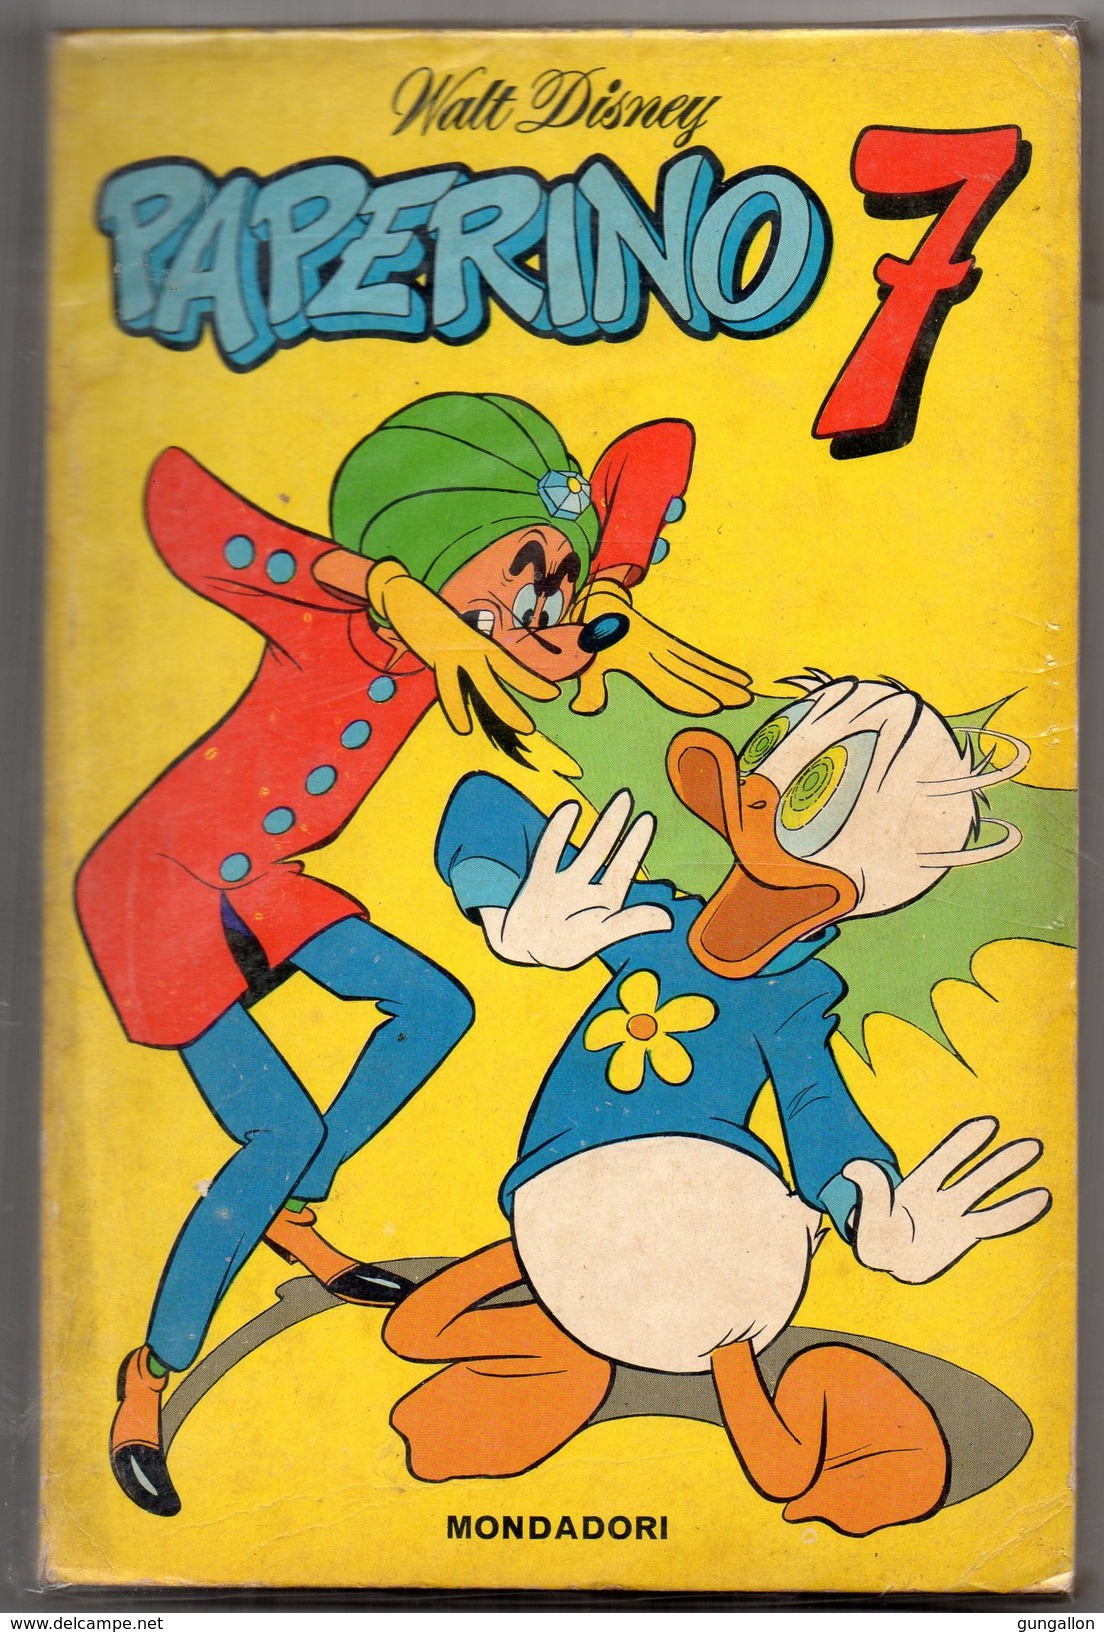 Classici Walt Disney  1° Serie  (Mondadori 16-03-1969)  "Paperino 7" - Disney